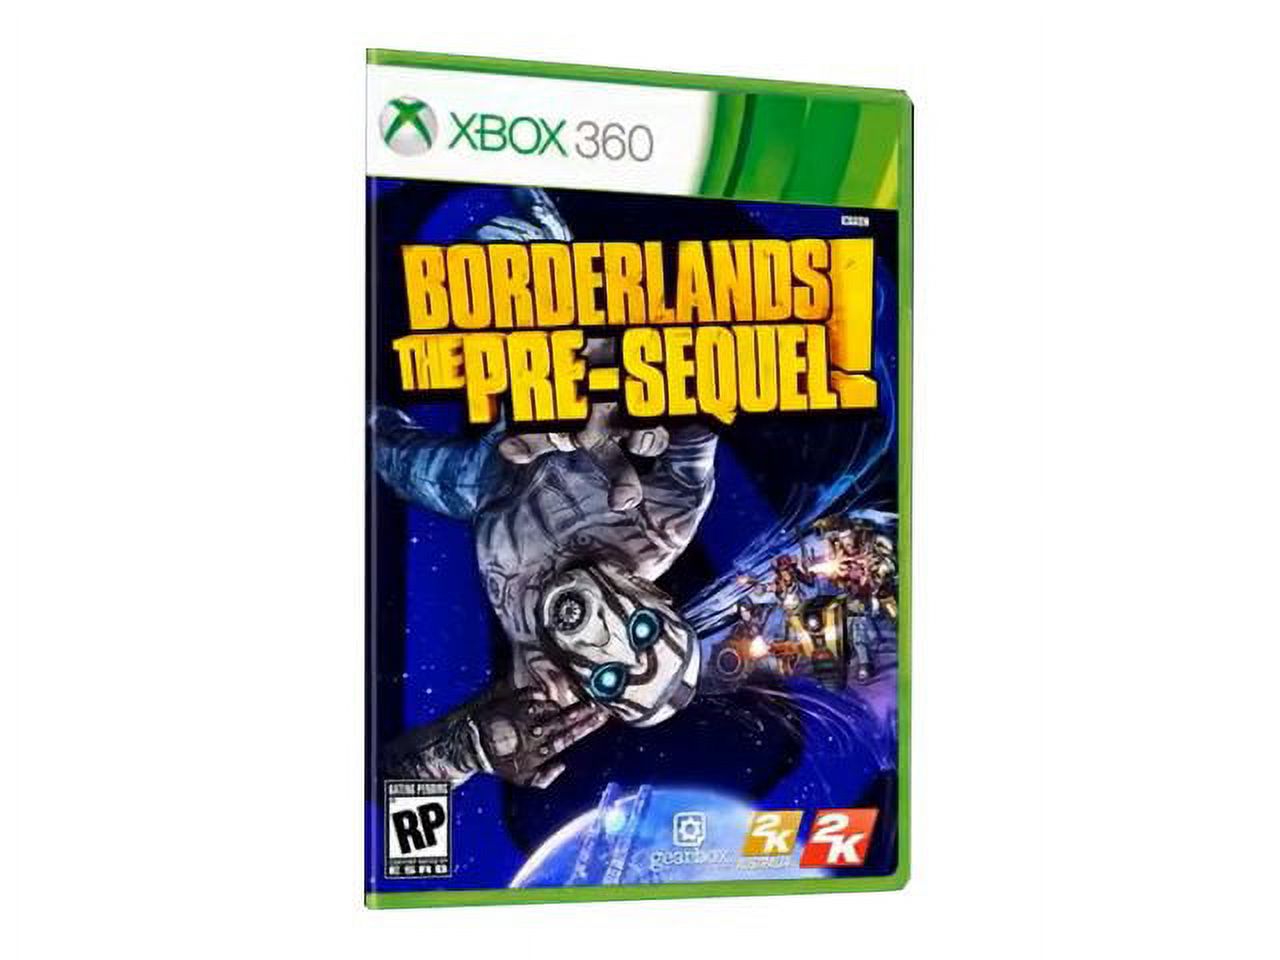 Borderlands Pre-Sequel (Pre-Owned), 2K, PC, 886162530100 - image 2 of 3